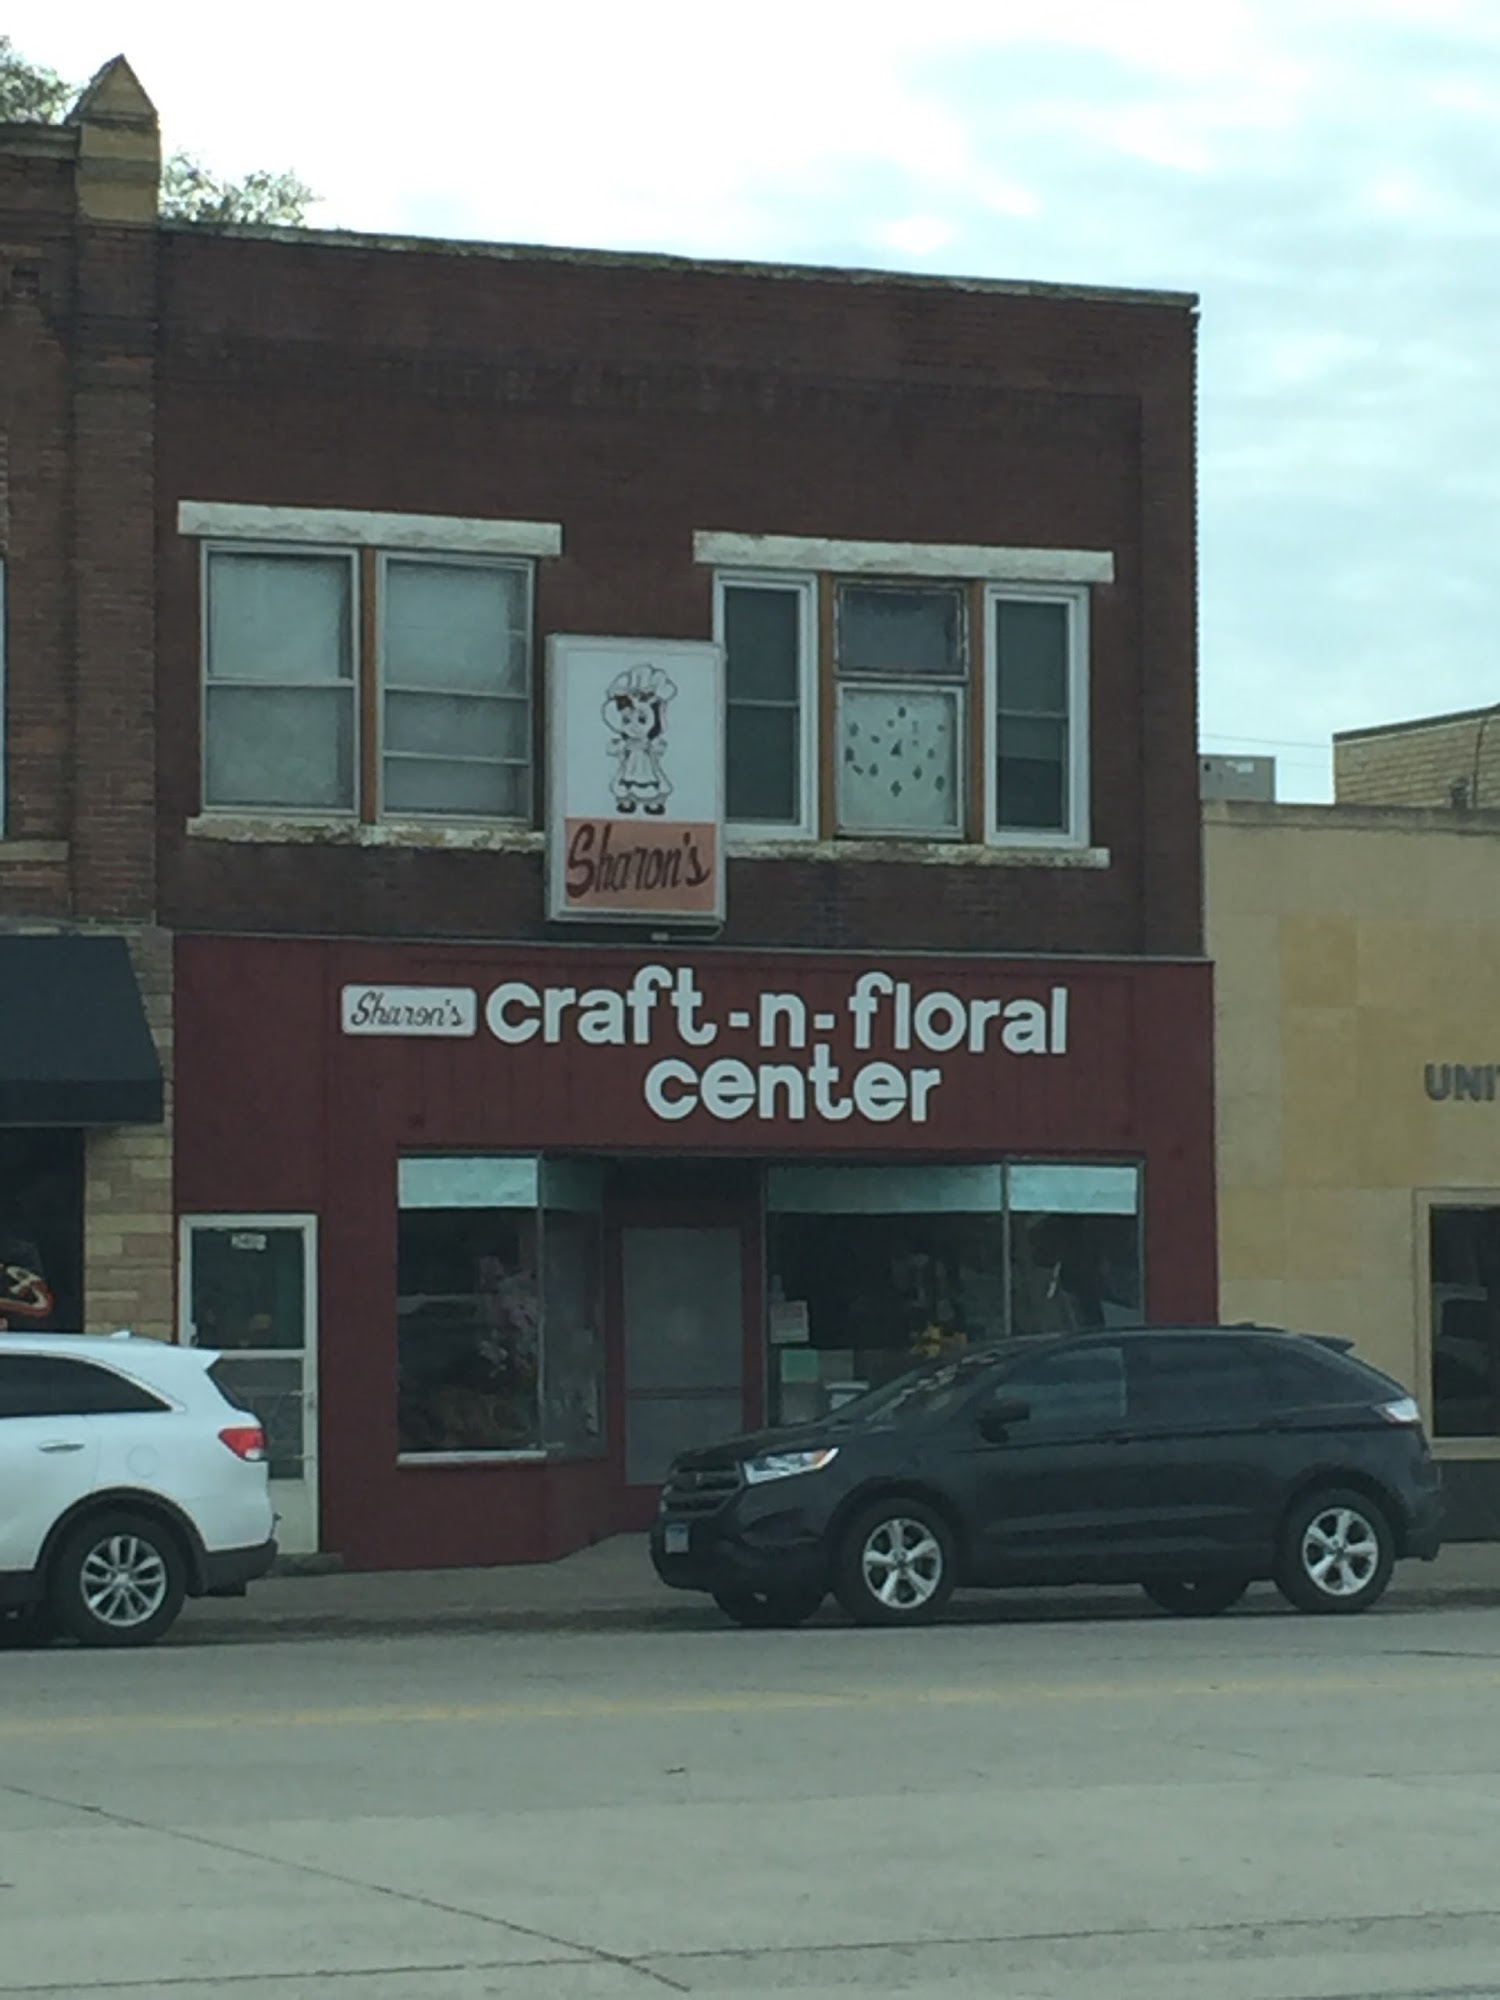 Sharon's Craft-N-Floral Center